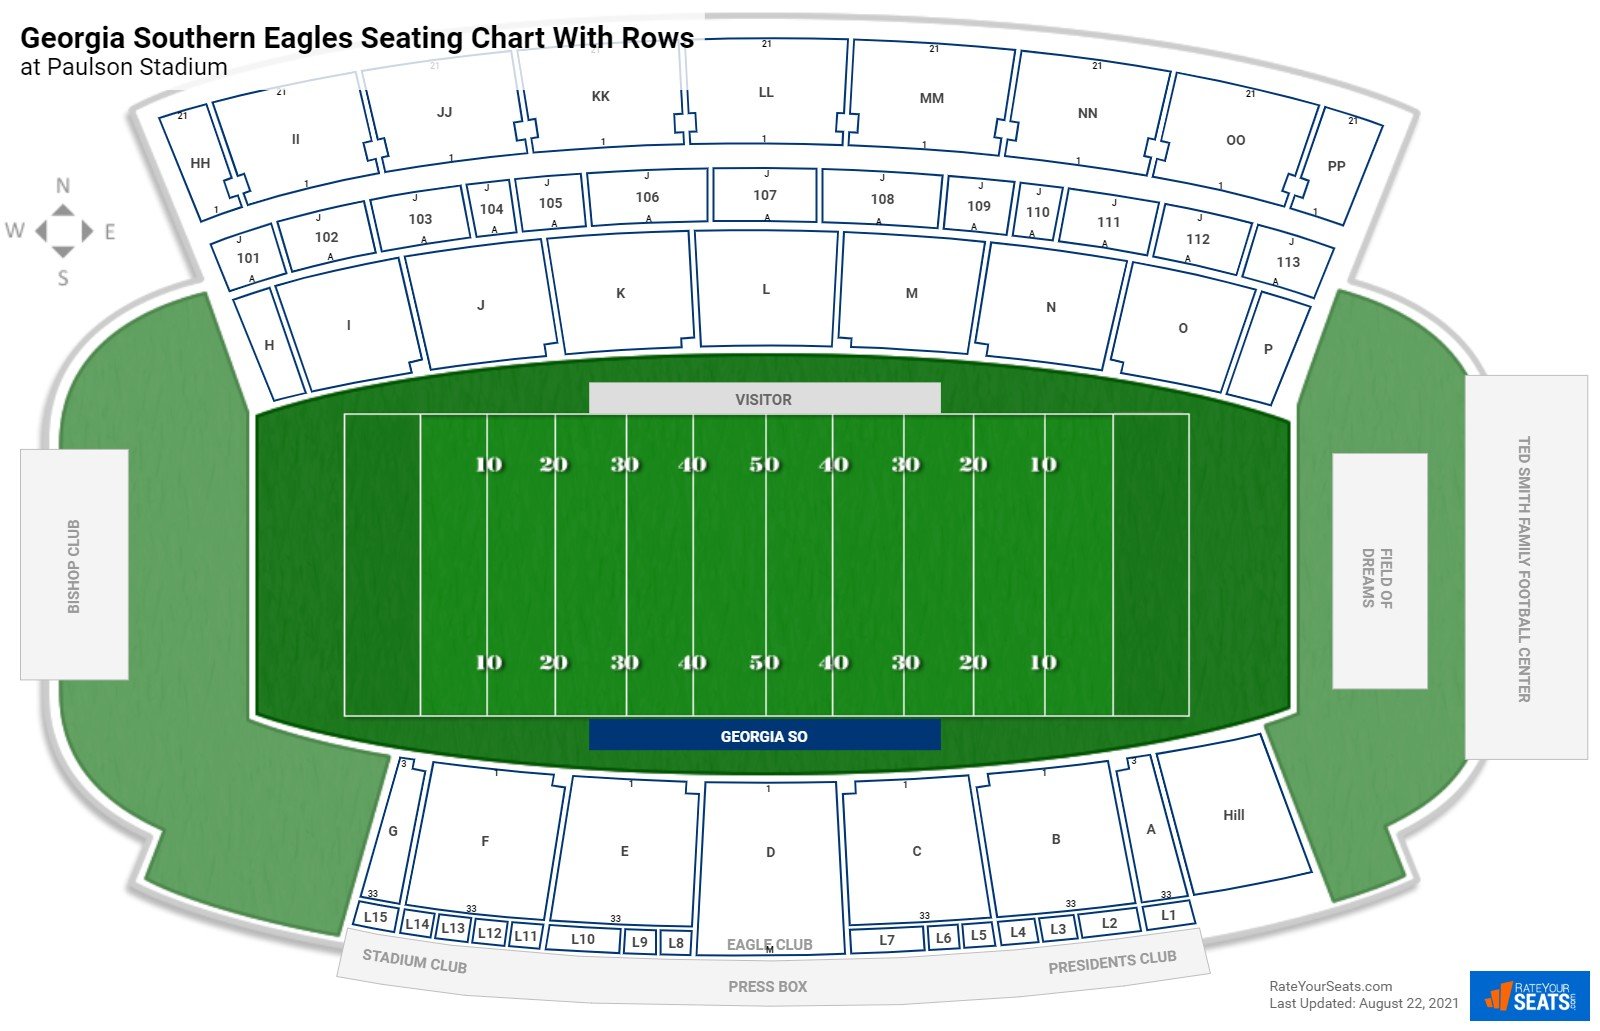 Paulson Stadium seating chart with row numbers